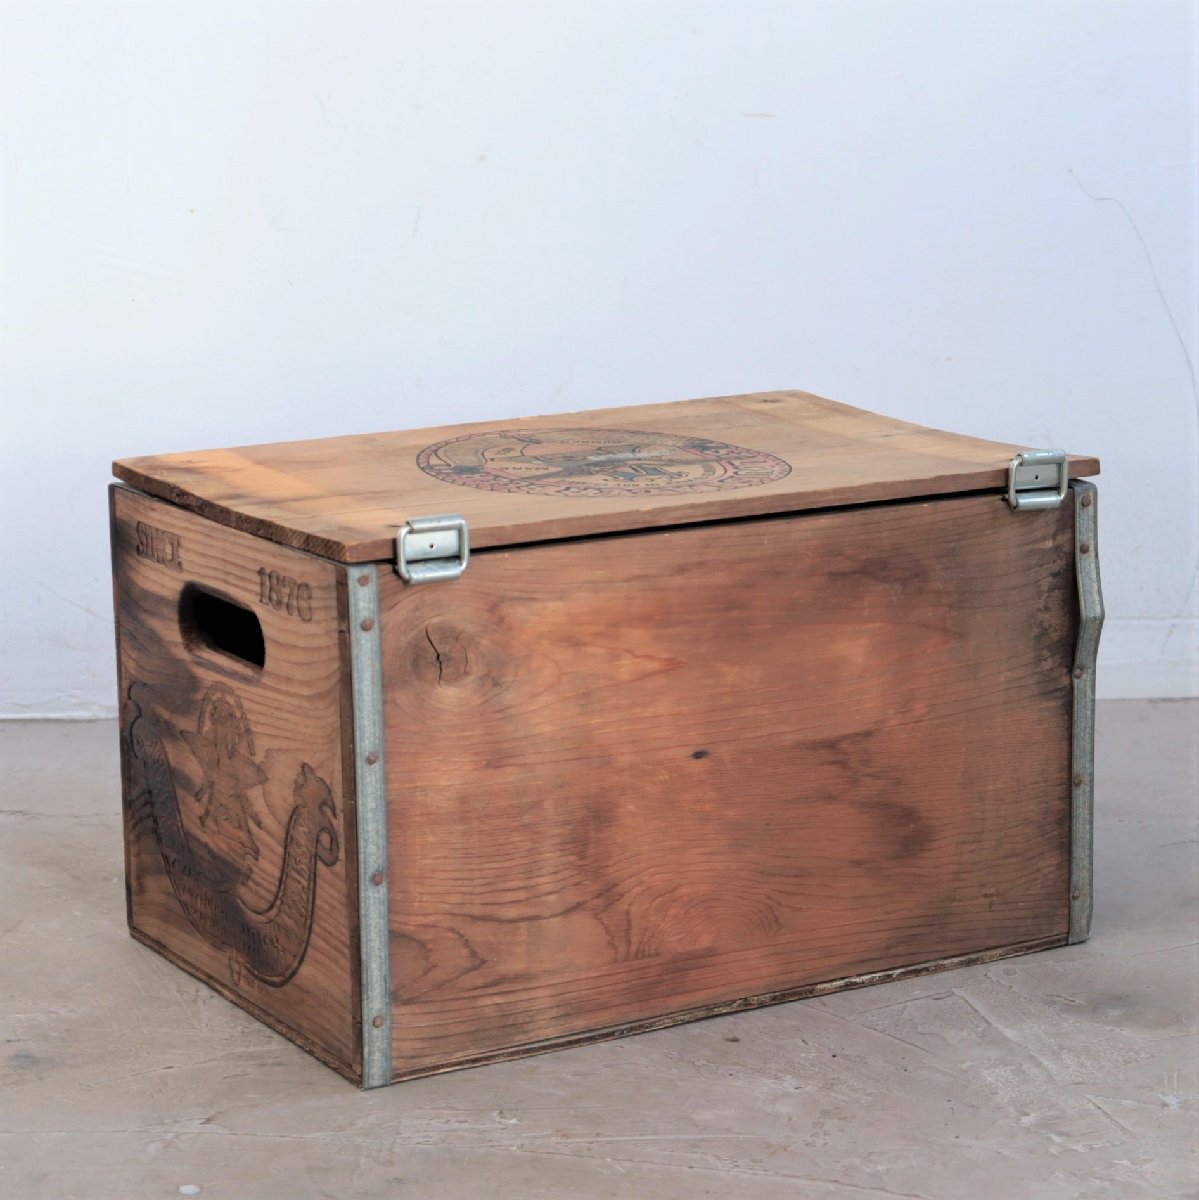 BUDWEISER バドワイザー ヴィンテージ 蓋つき木箱 アンティーク ウッド